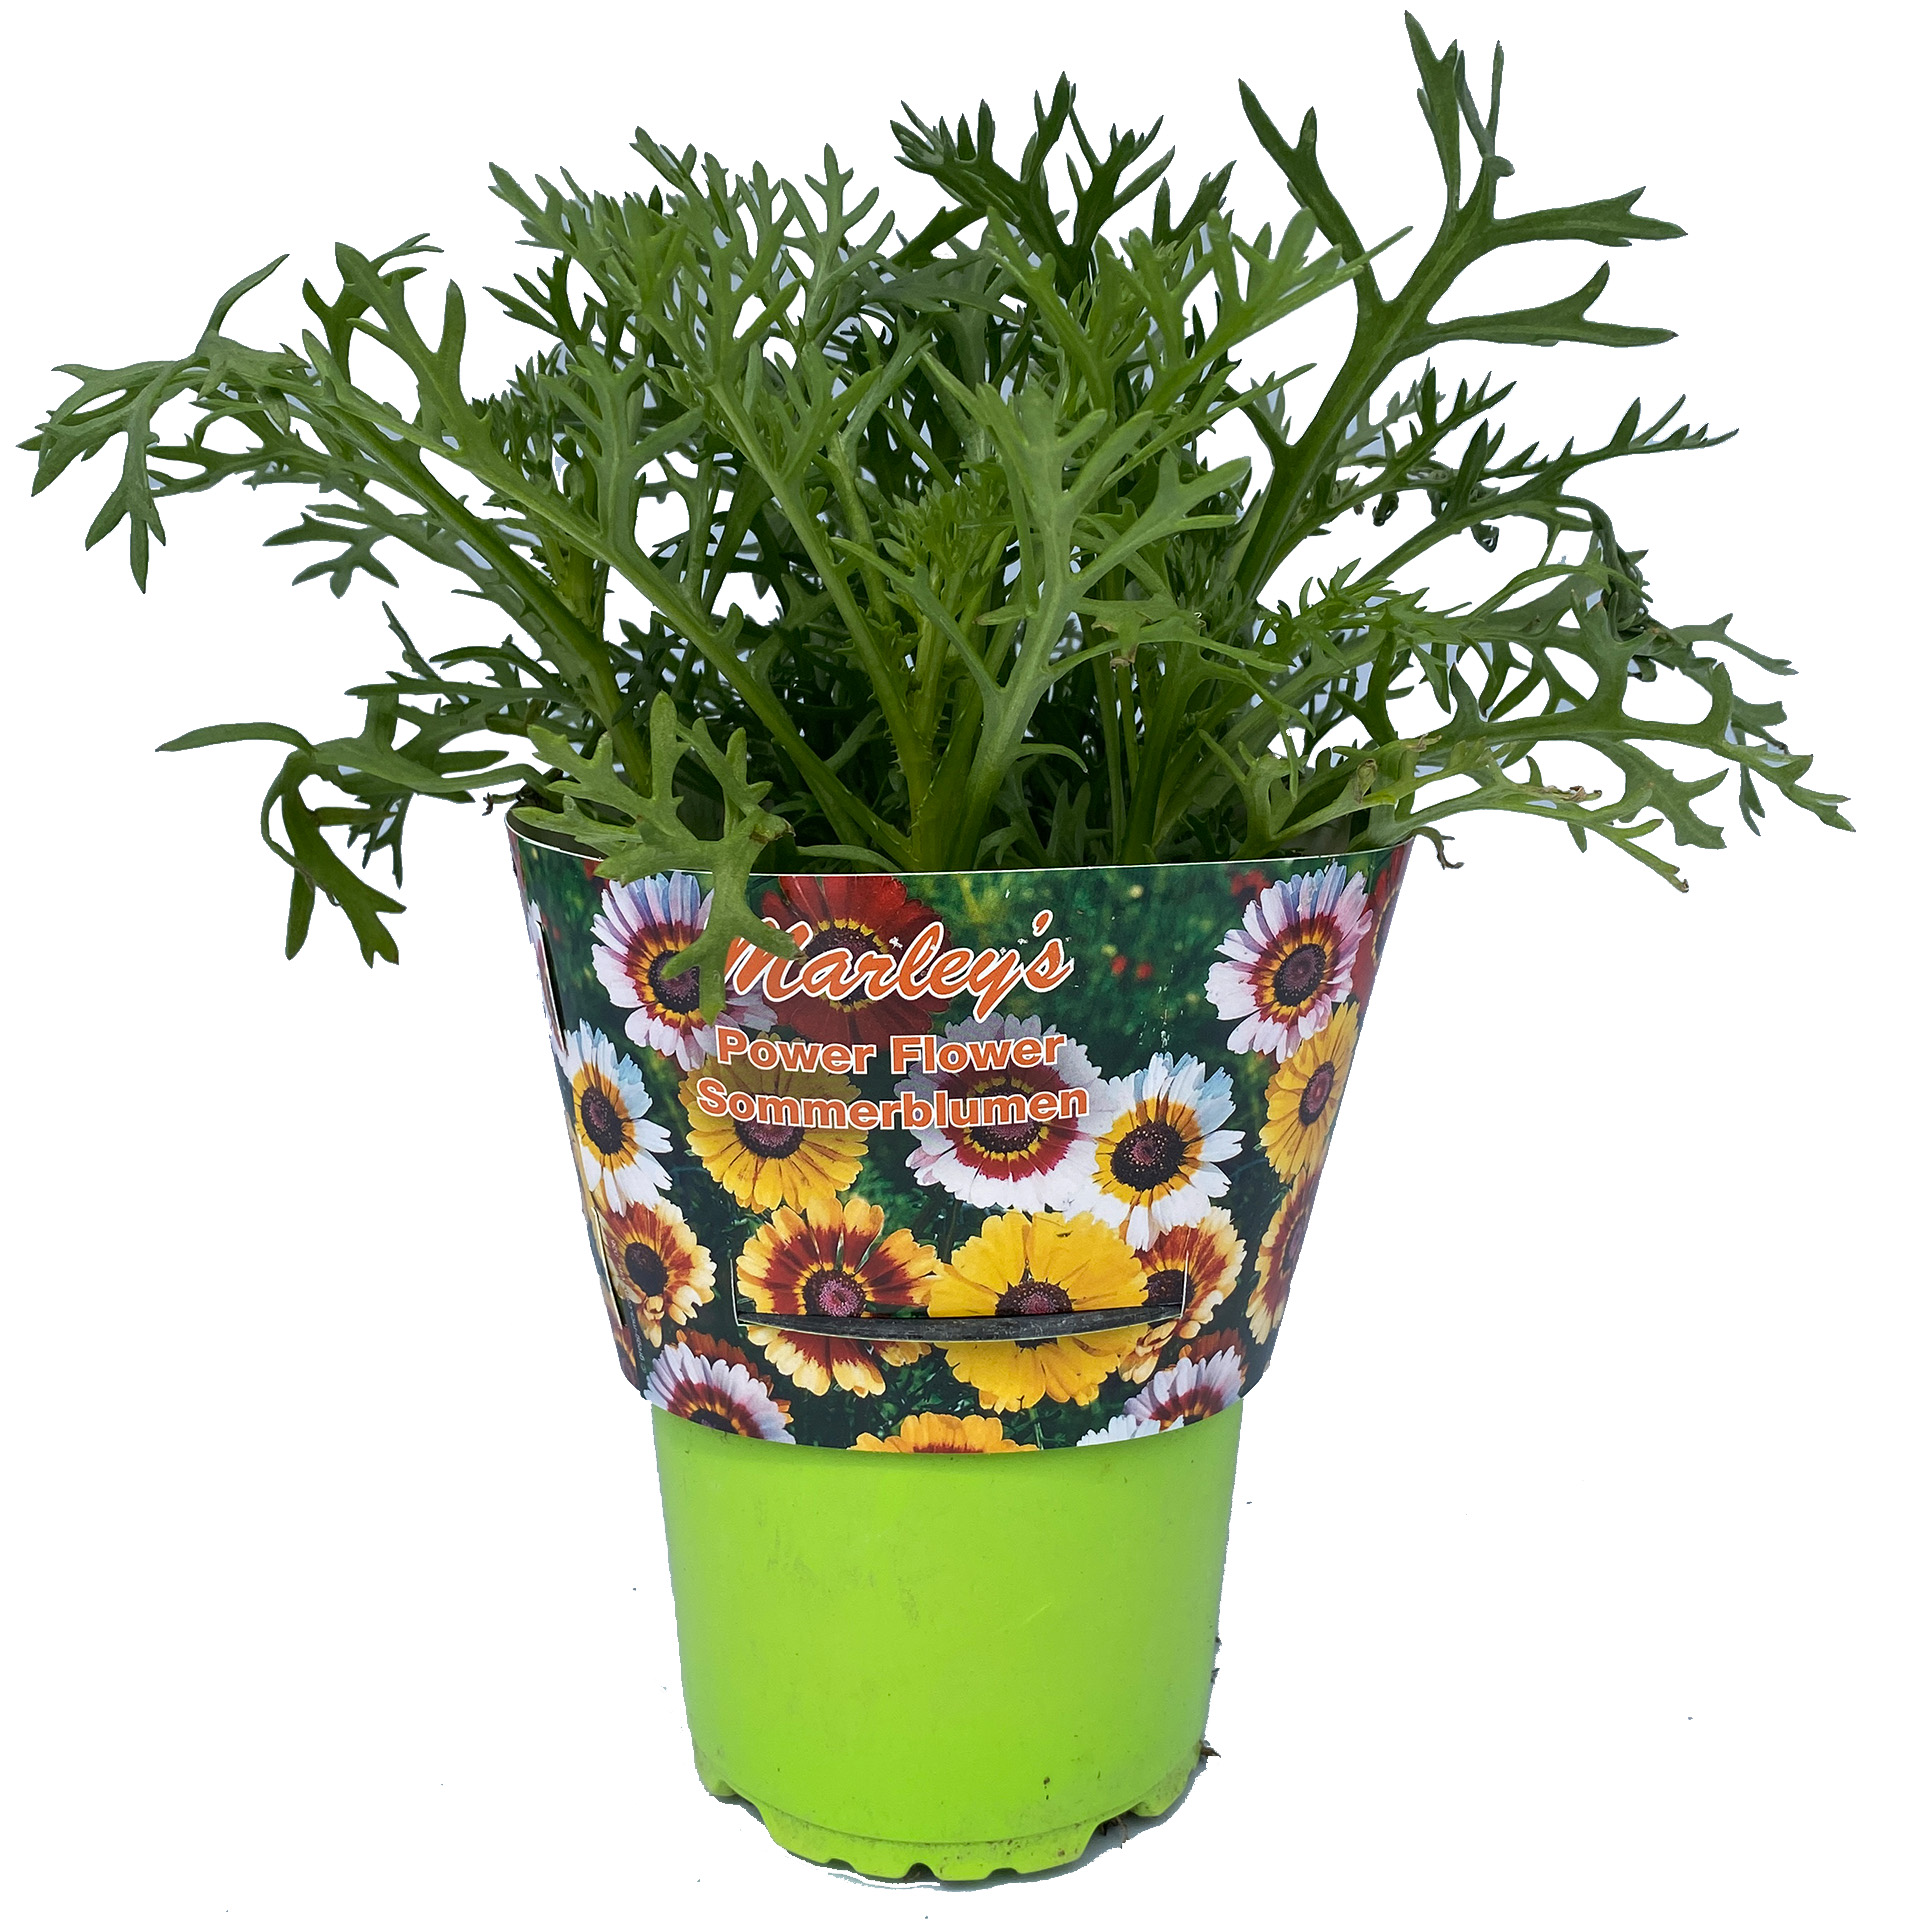 Herbst-Chrysantheme - Chrysanthemum indicum 'Marley's Farbmix', 12cm Topf